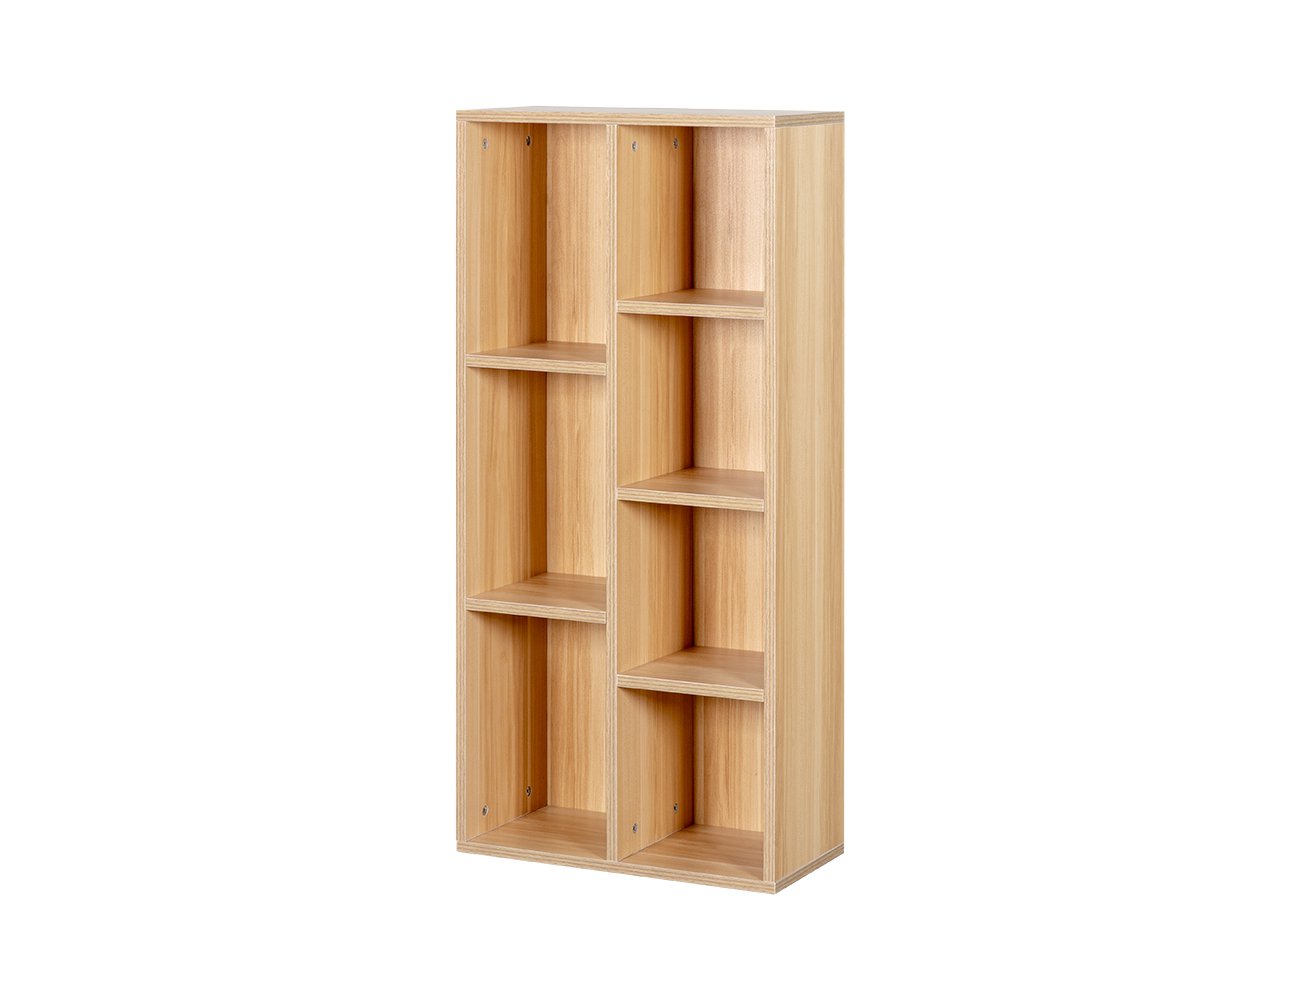 4-Level Shelf (Fully Assembled)